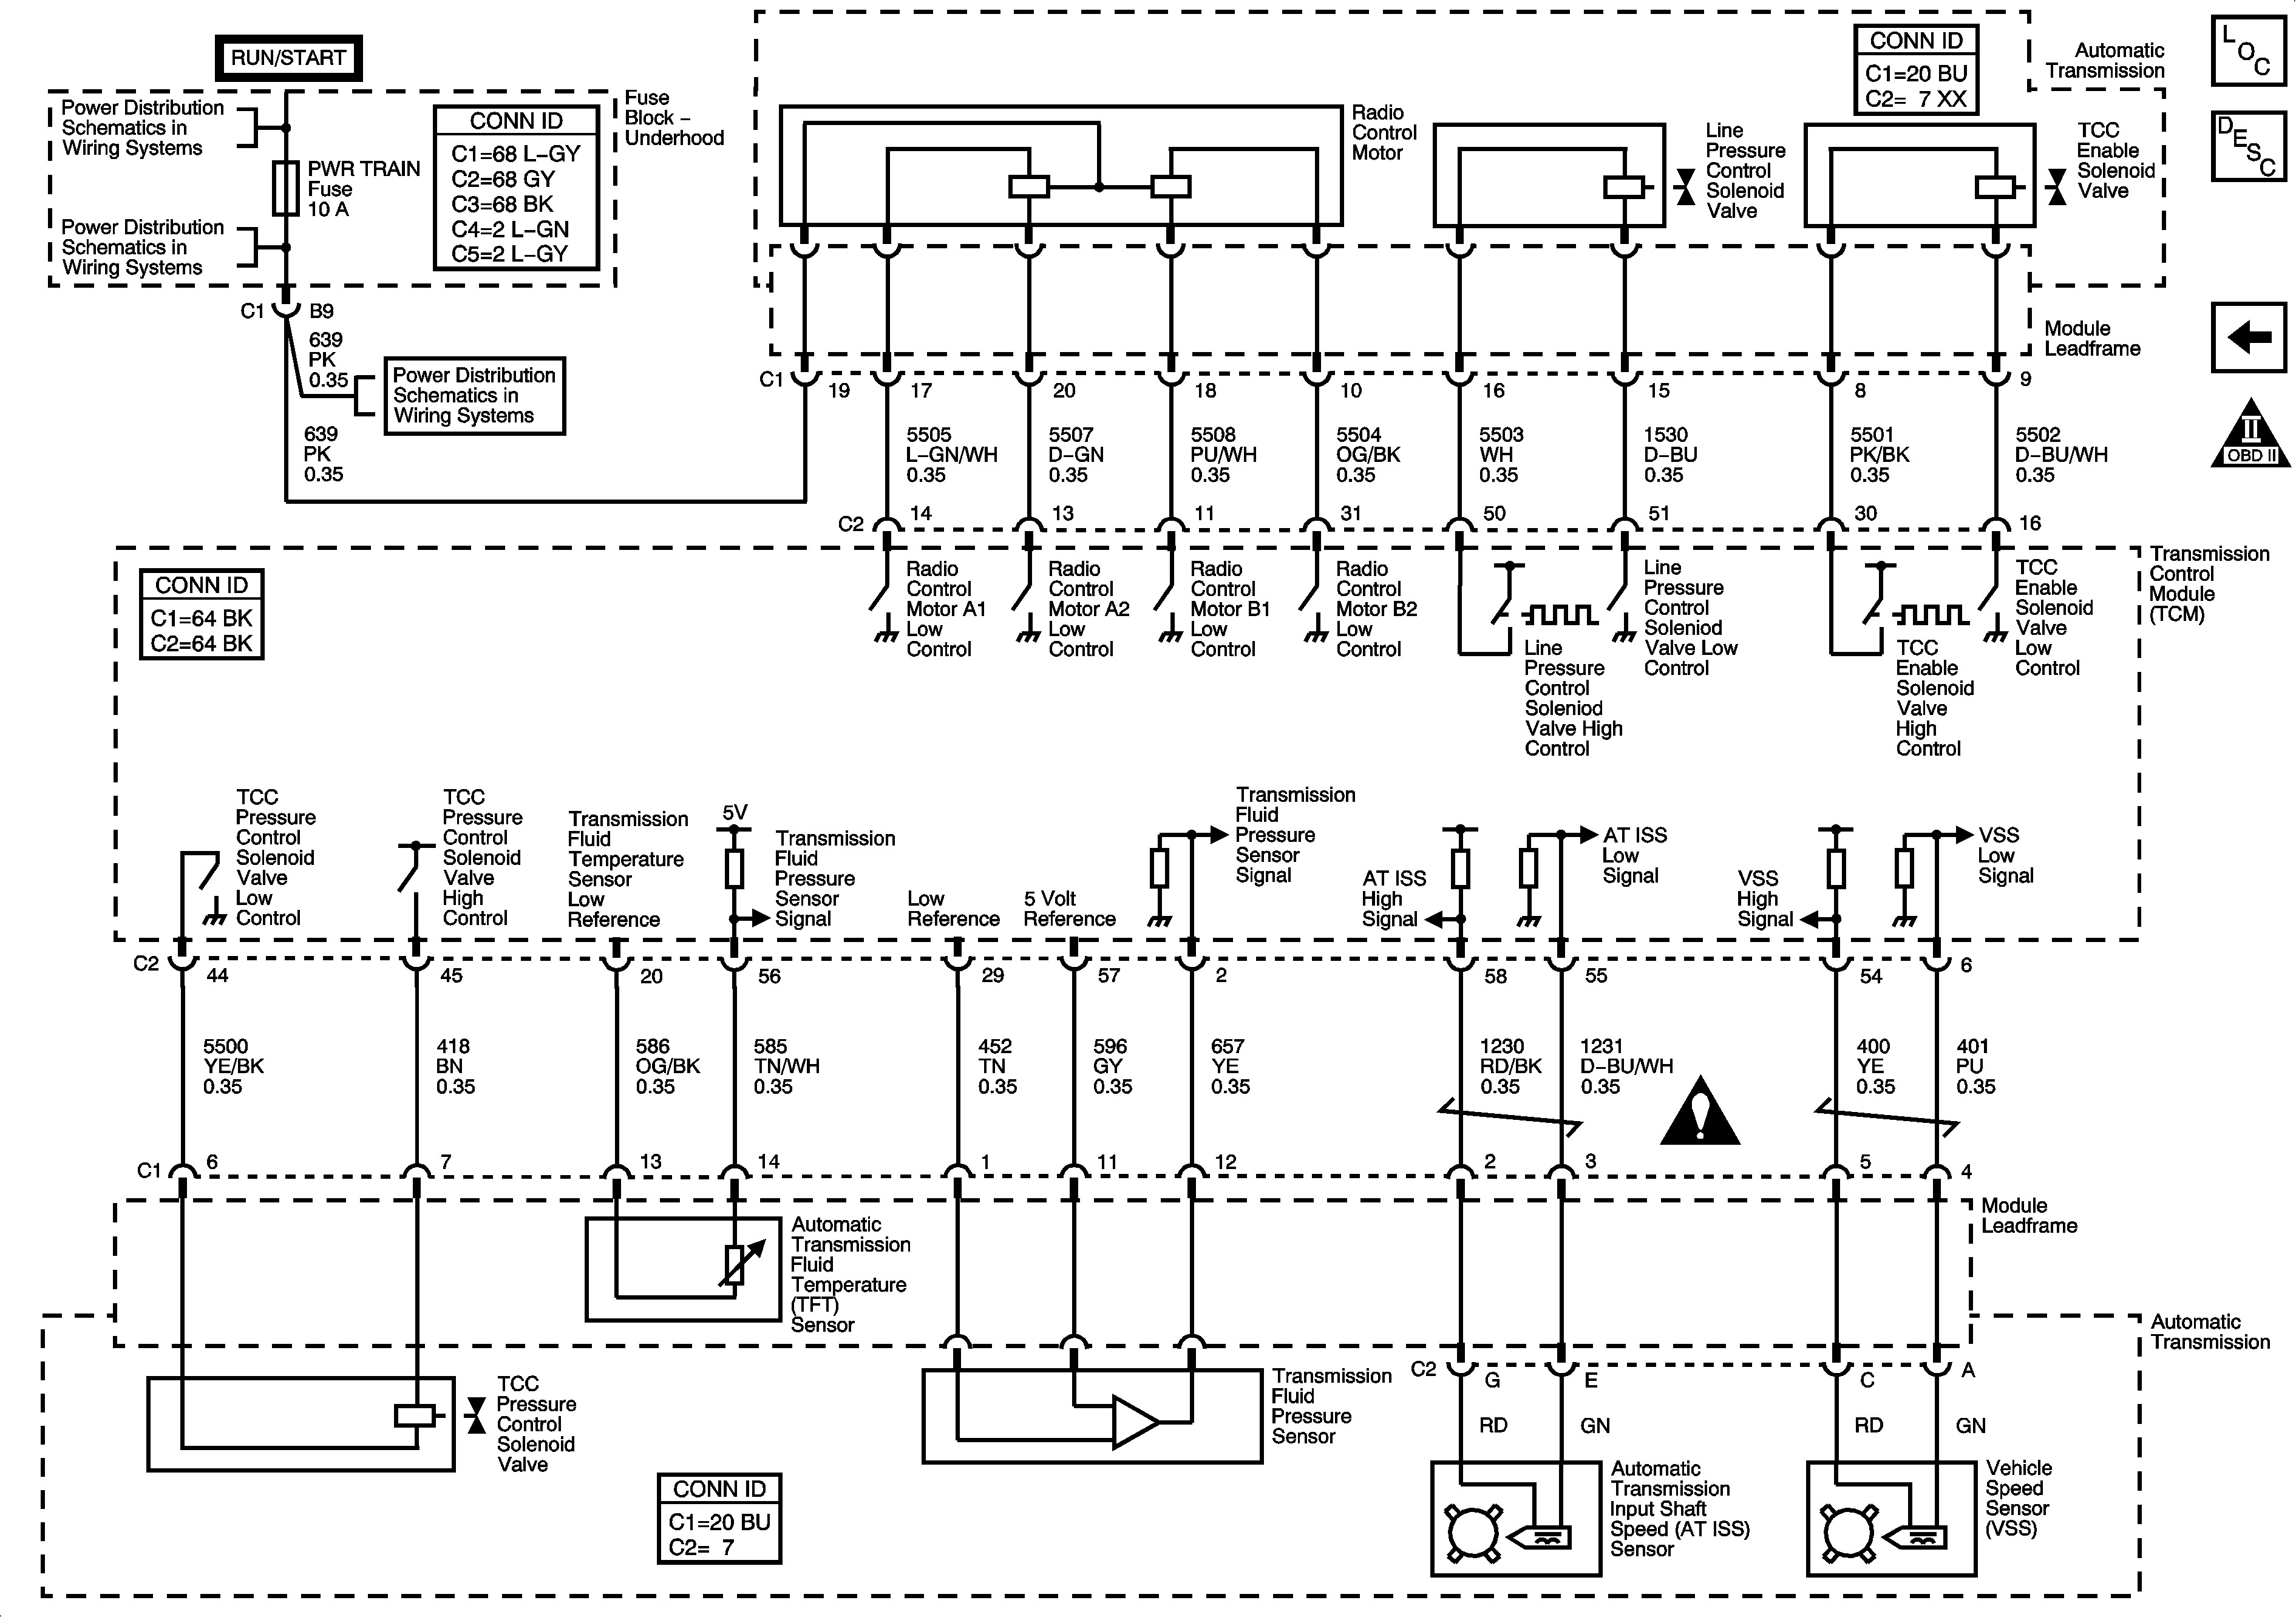 2002 Saturn Vue Engine Diagram Saturn Transmission Diagram Wiring Diagrams Of 2002 Saturn Vue Engine Diagram